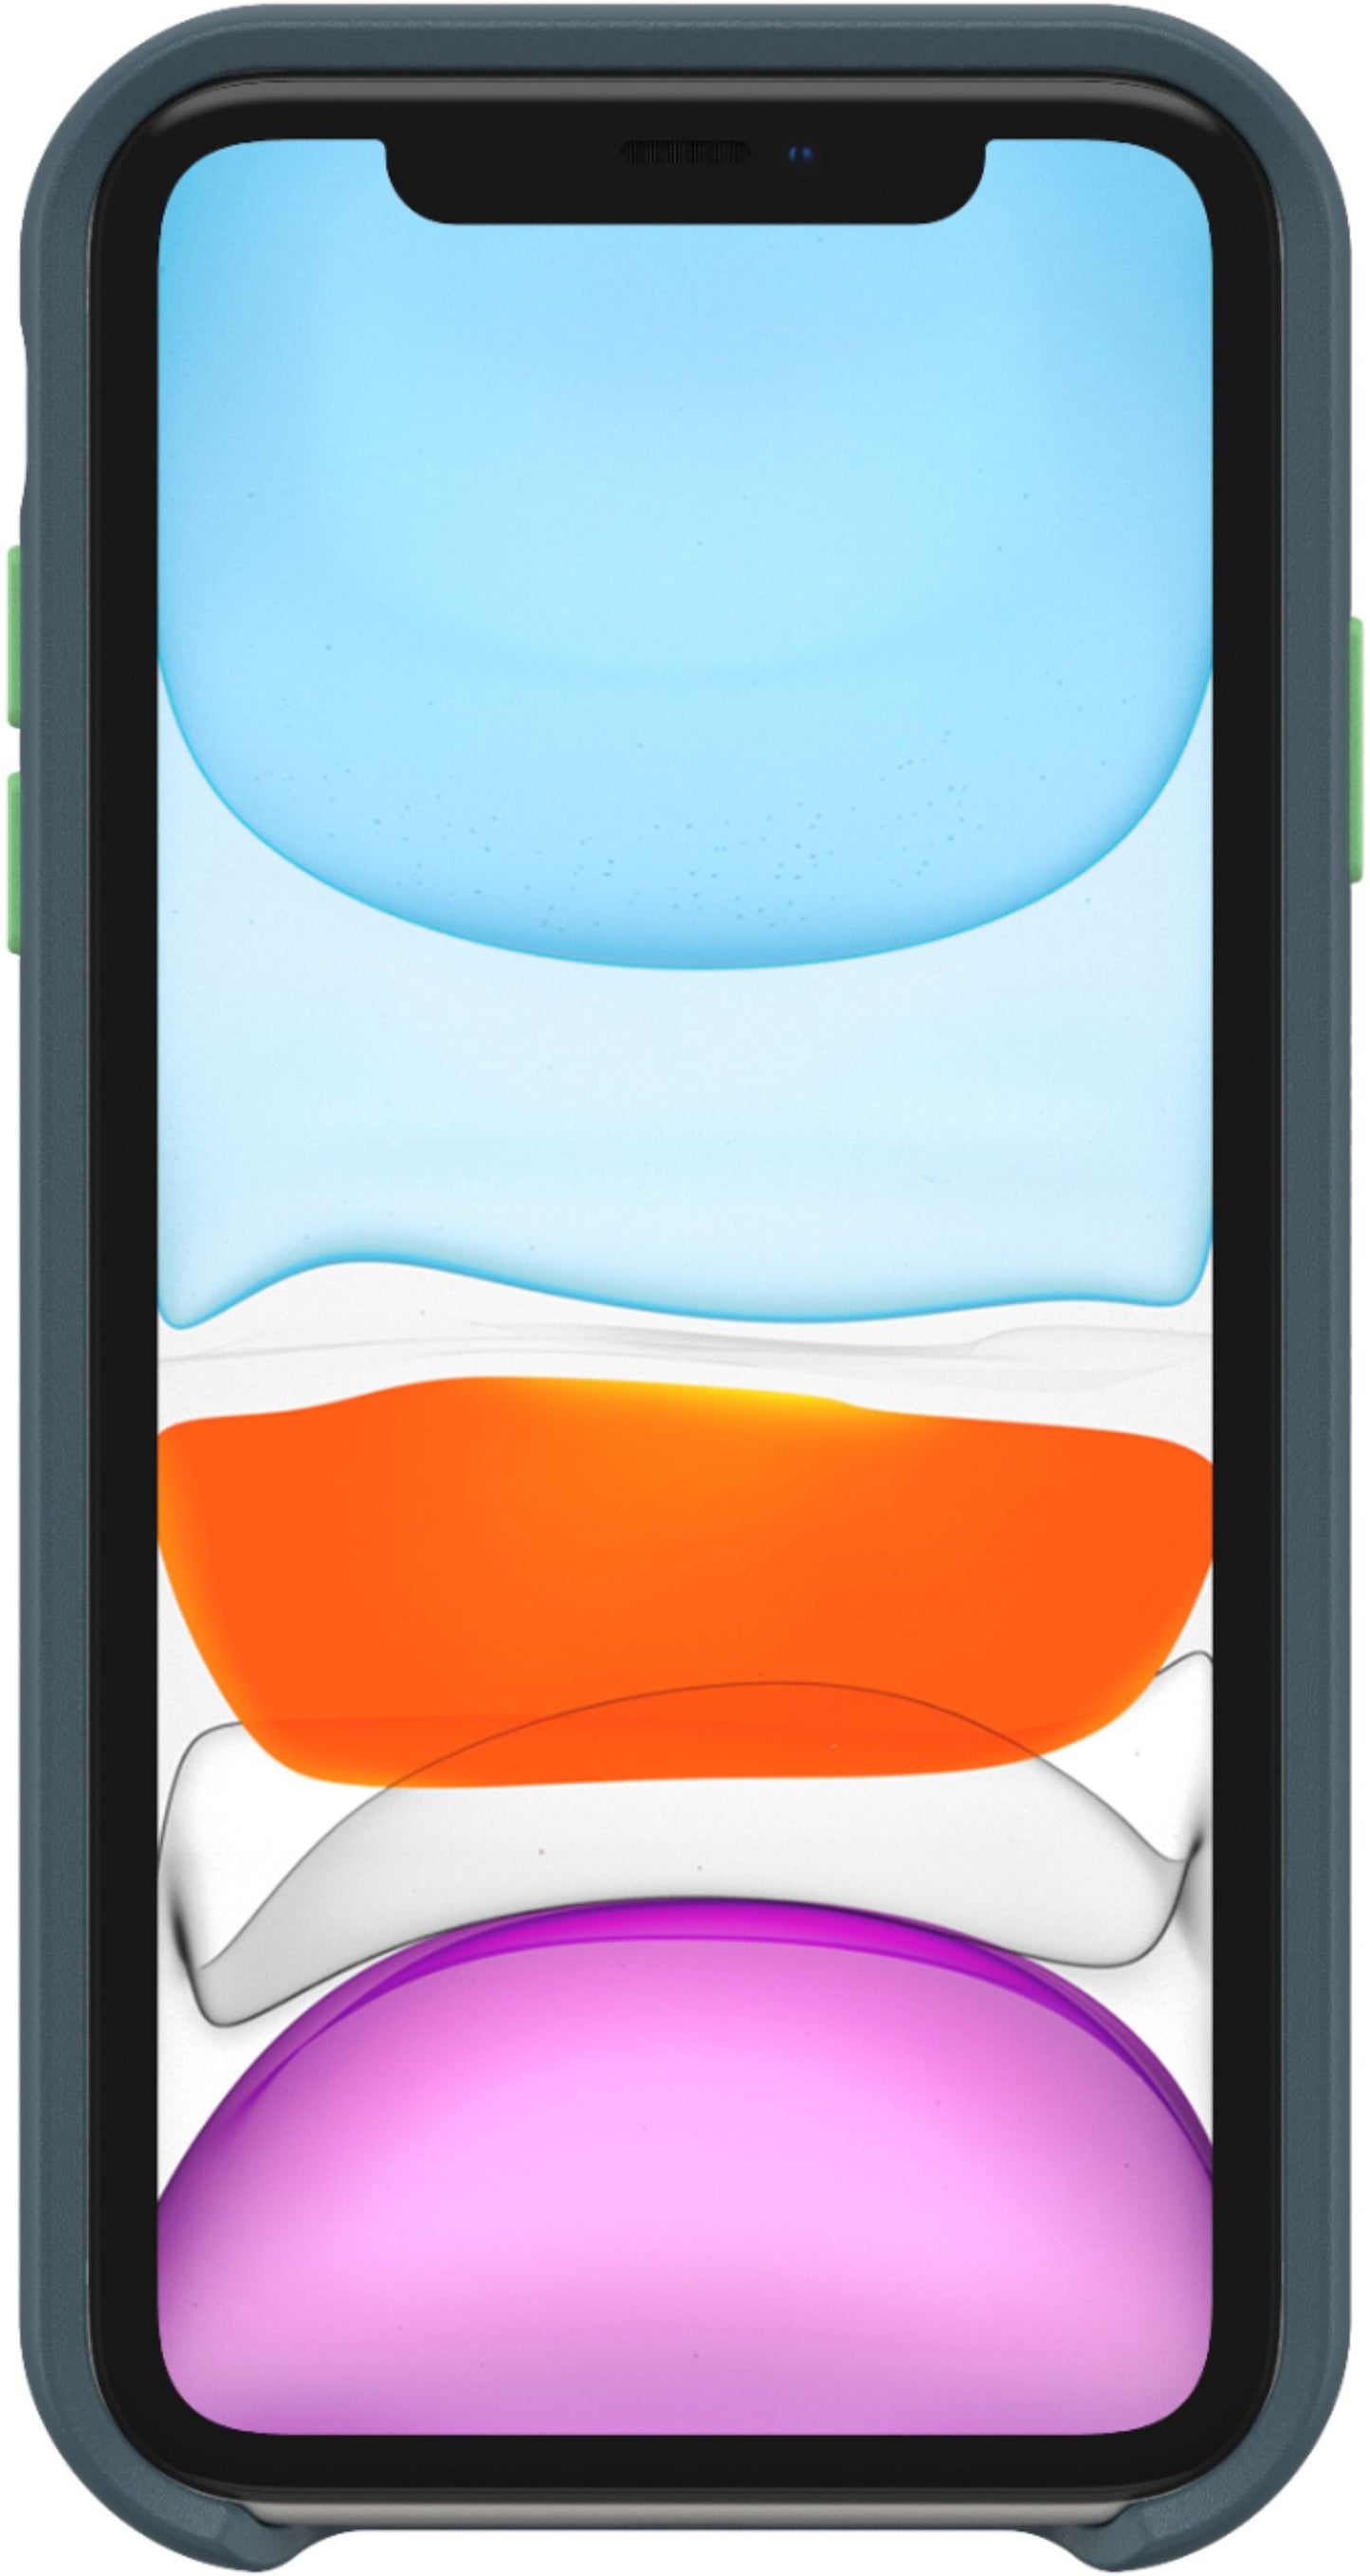 Lifeproof iPhone 11 Wake - Neptune